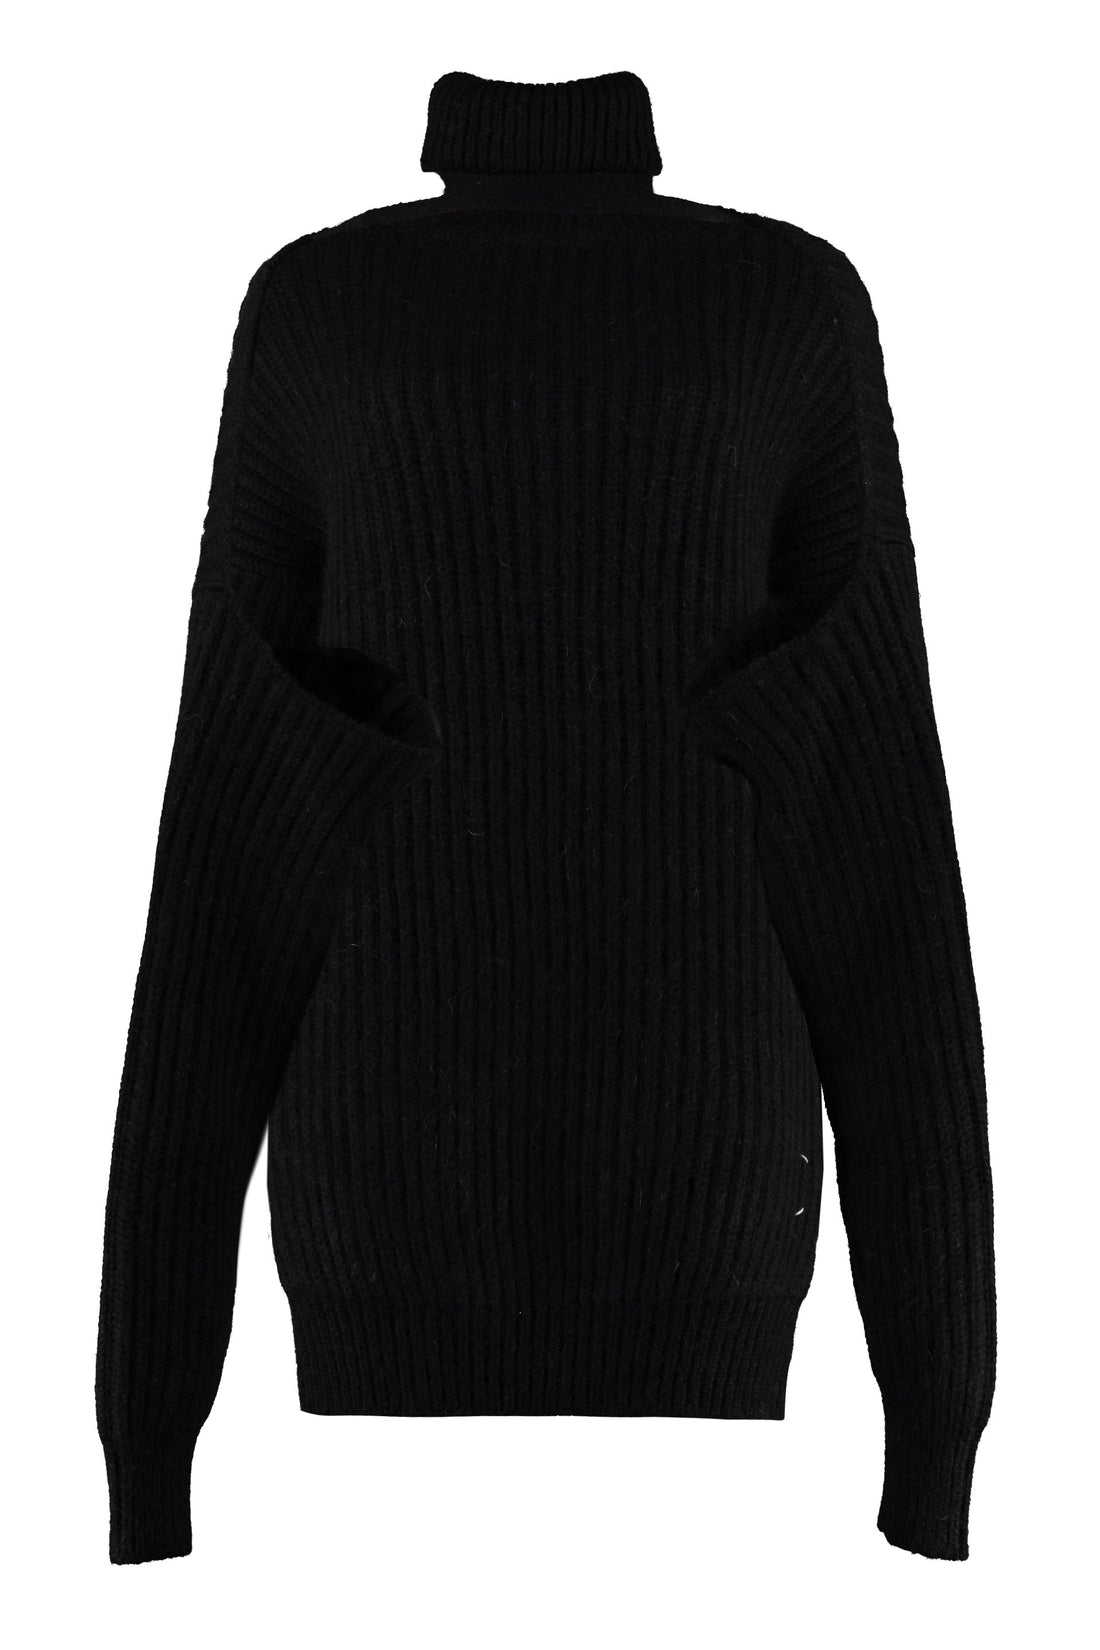 Maison Margiela-OUTLET-SALE-Ribbed oversize sweater-ARCHIVIST